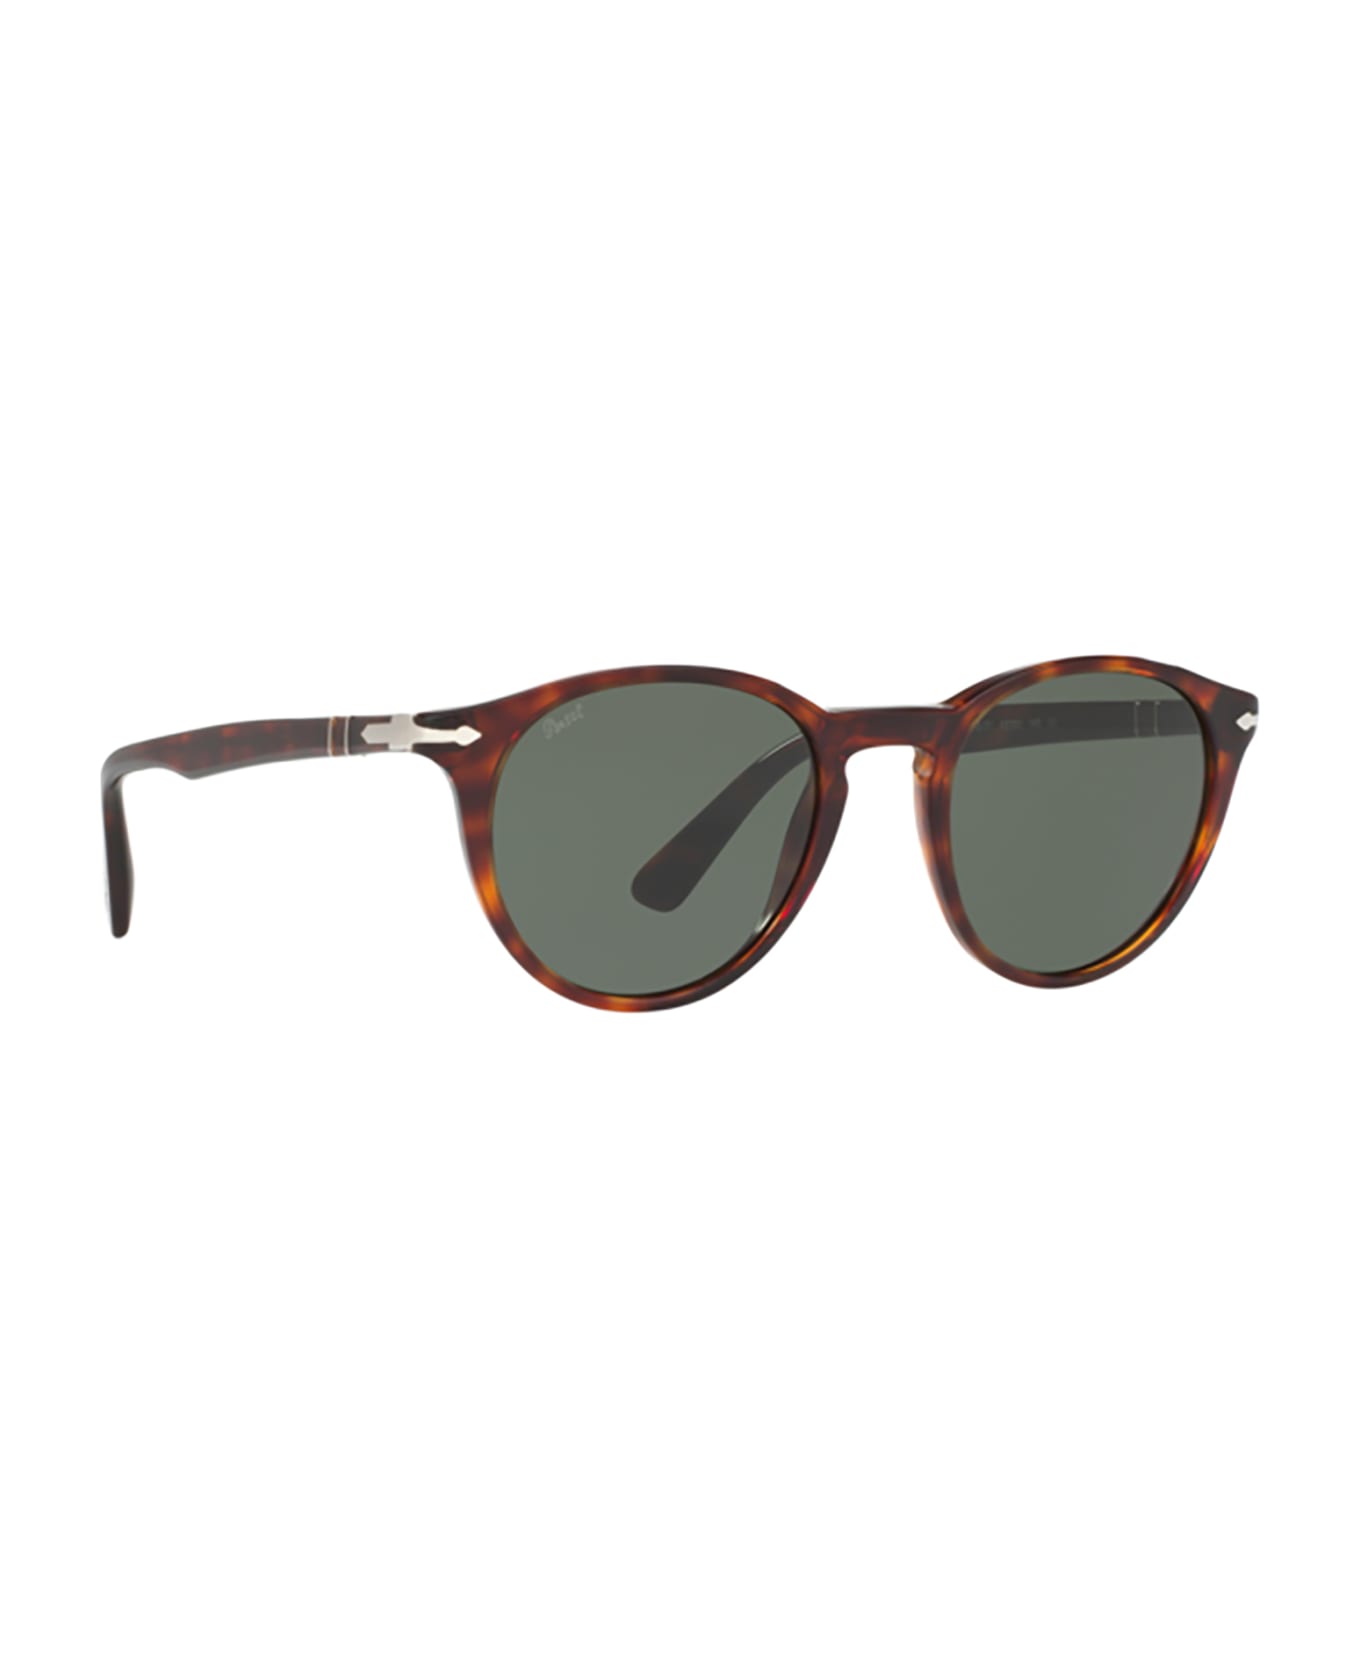 Persol Po3152s Havana Sunglasses - Havana